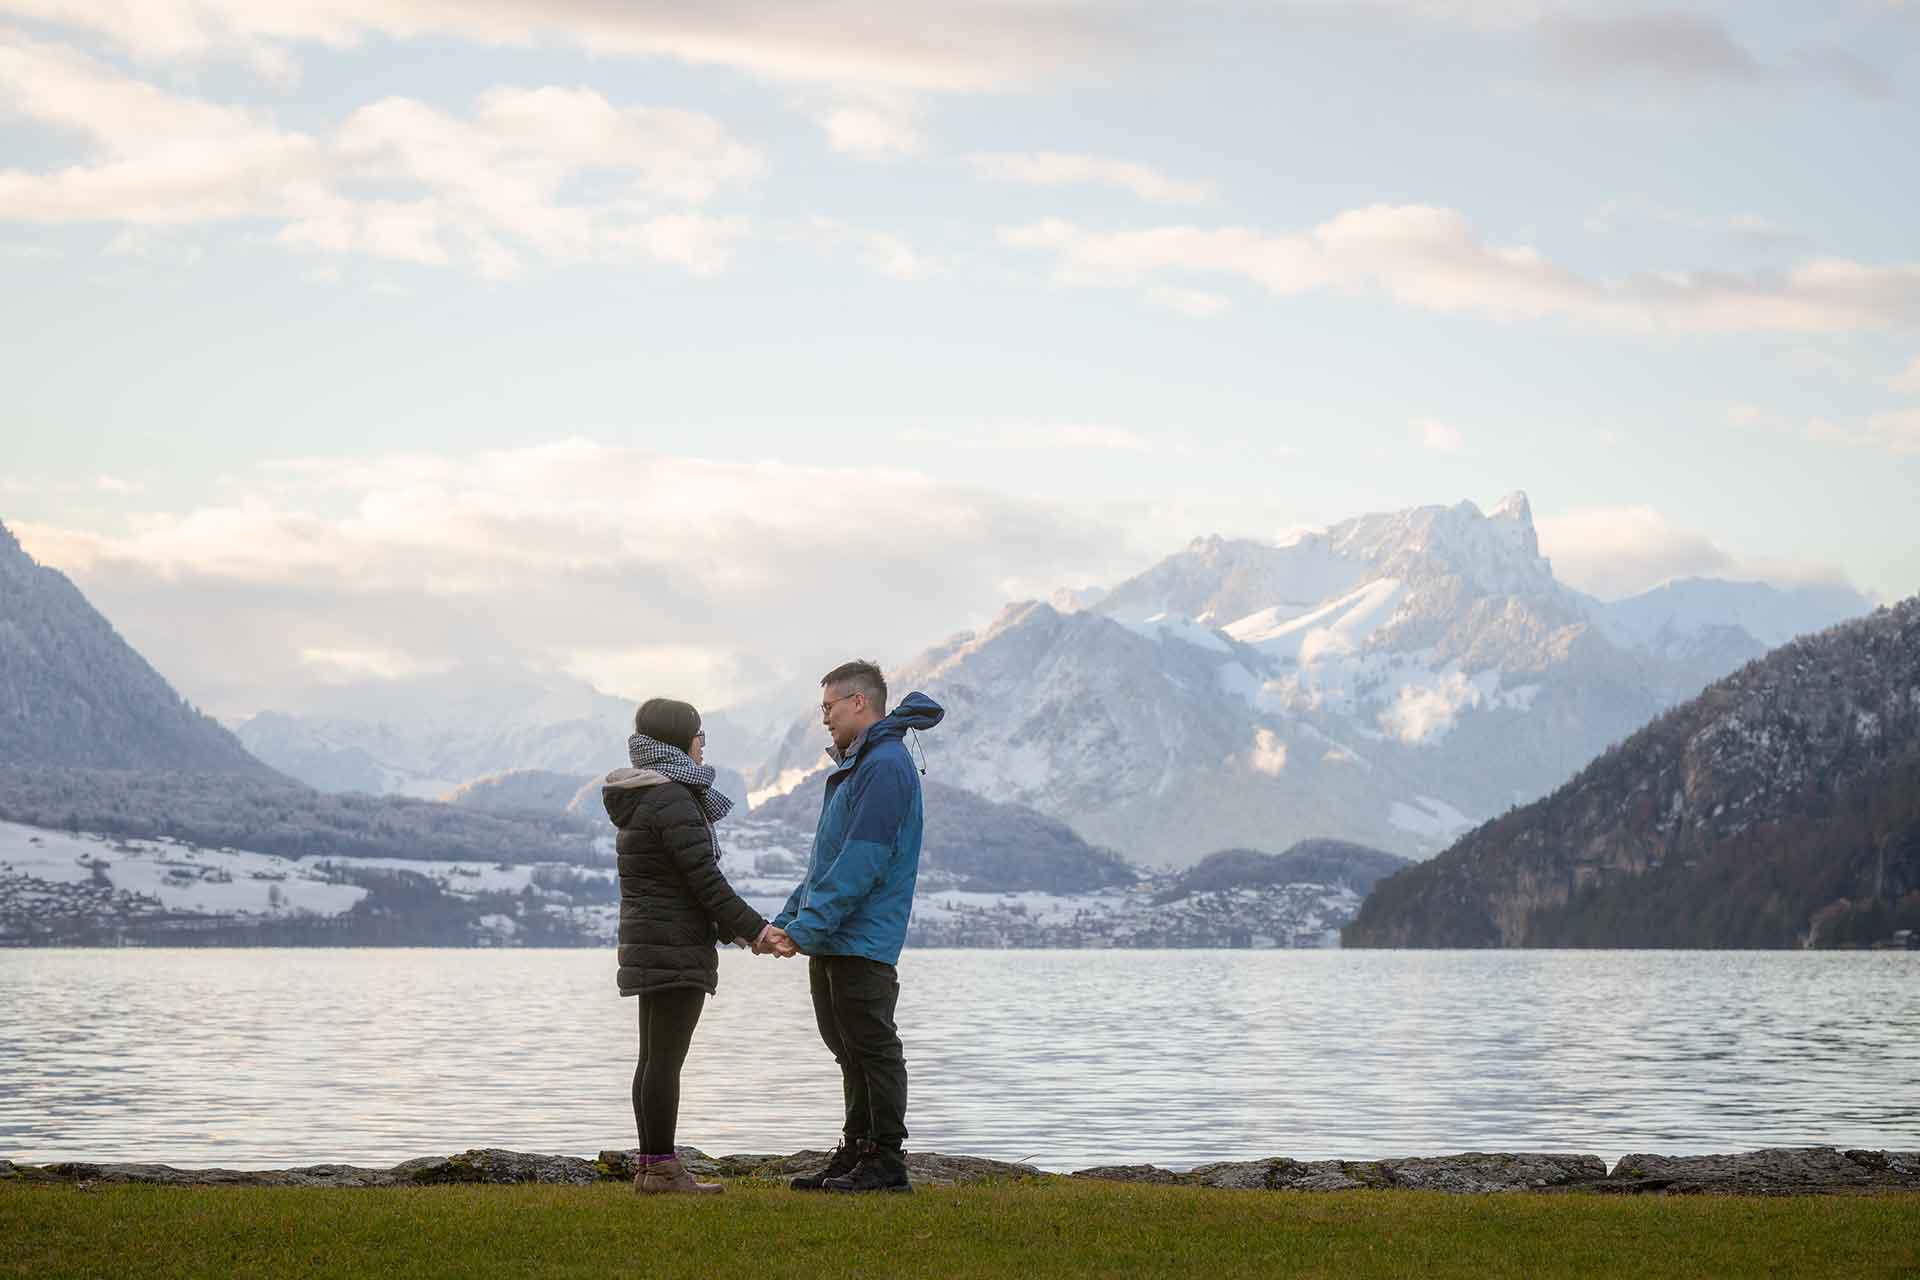 Surprise marriage proposal captured by Interlaken photographer John Wisdom in Switzerland